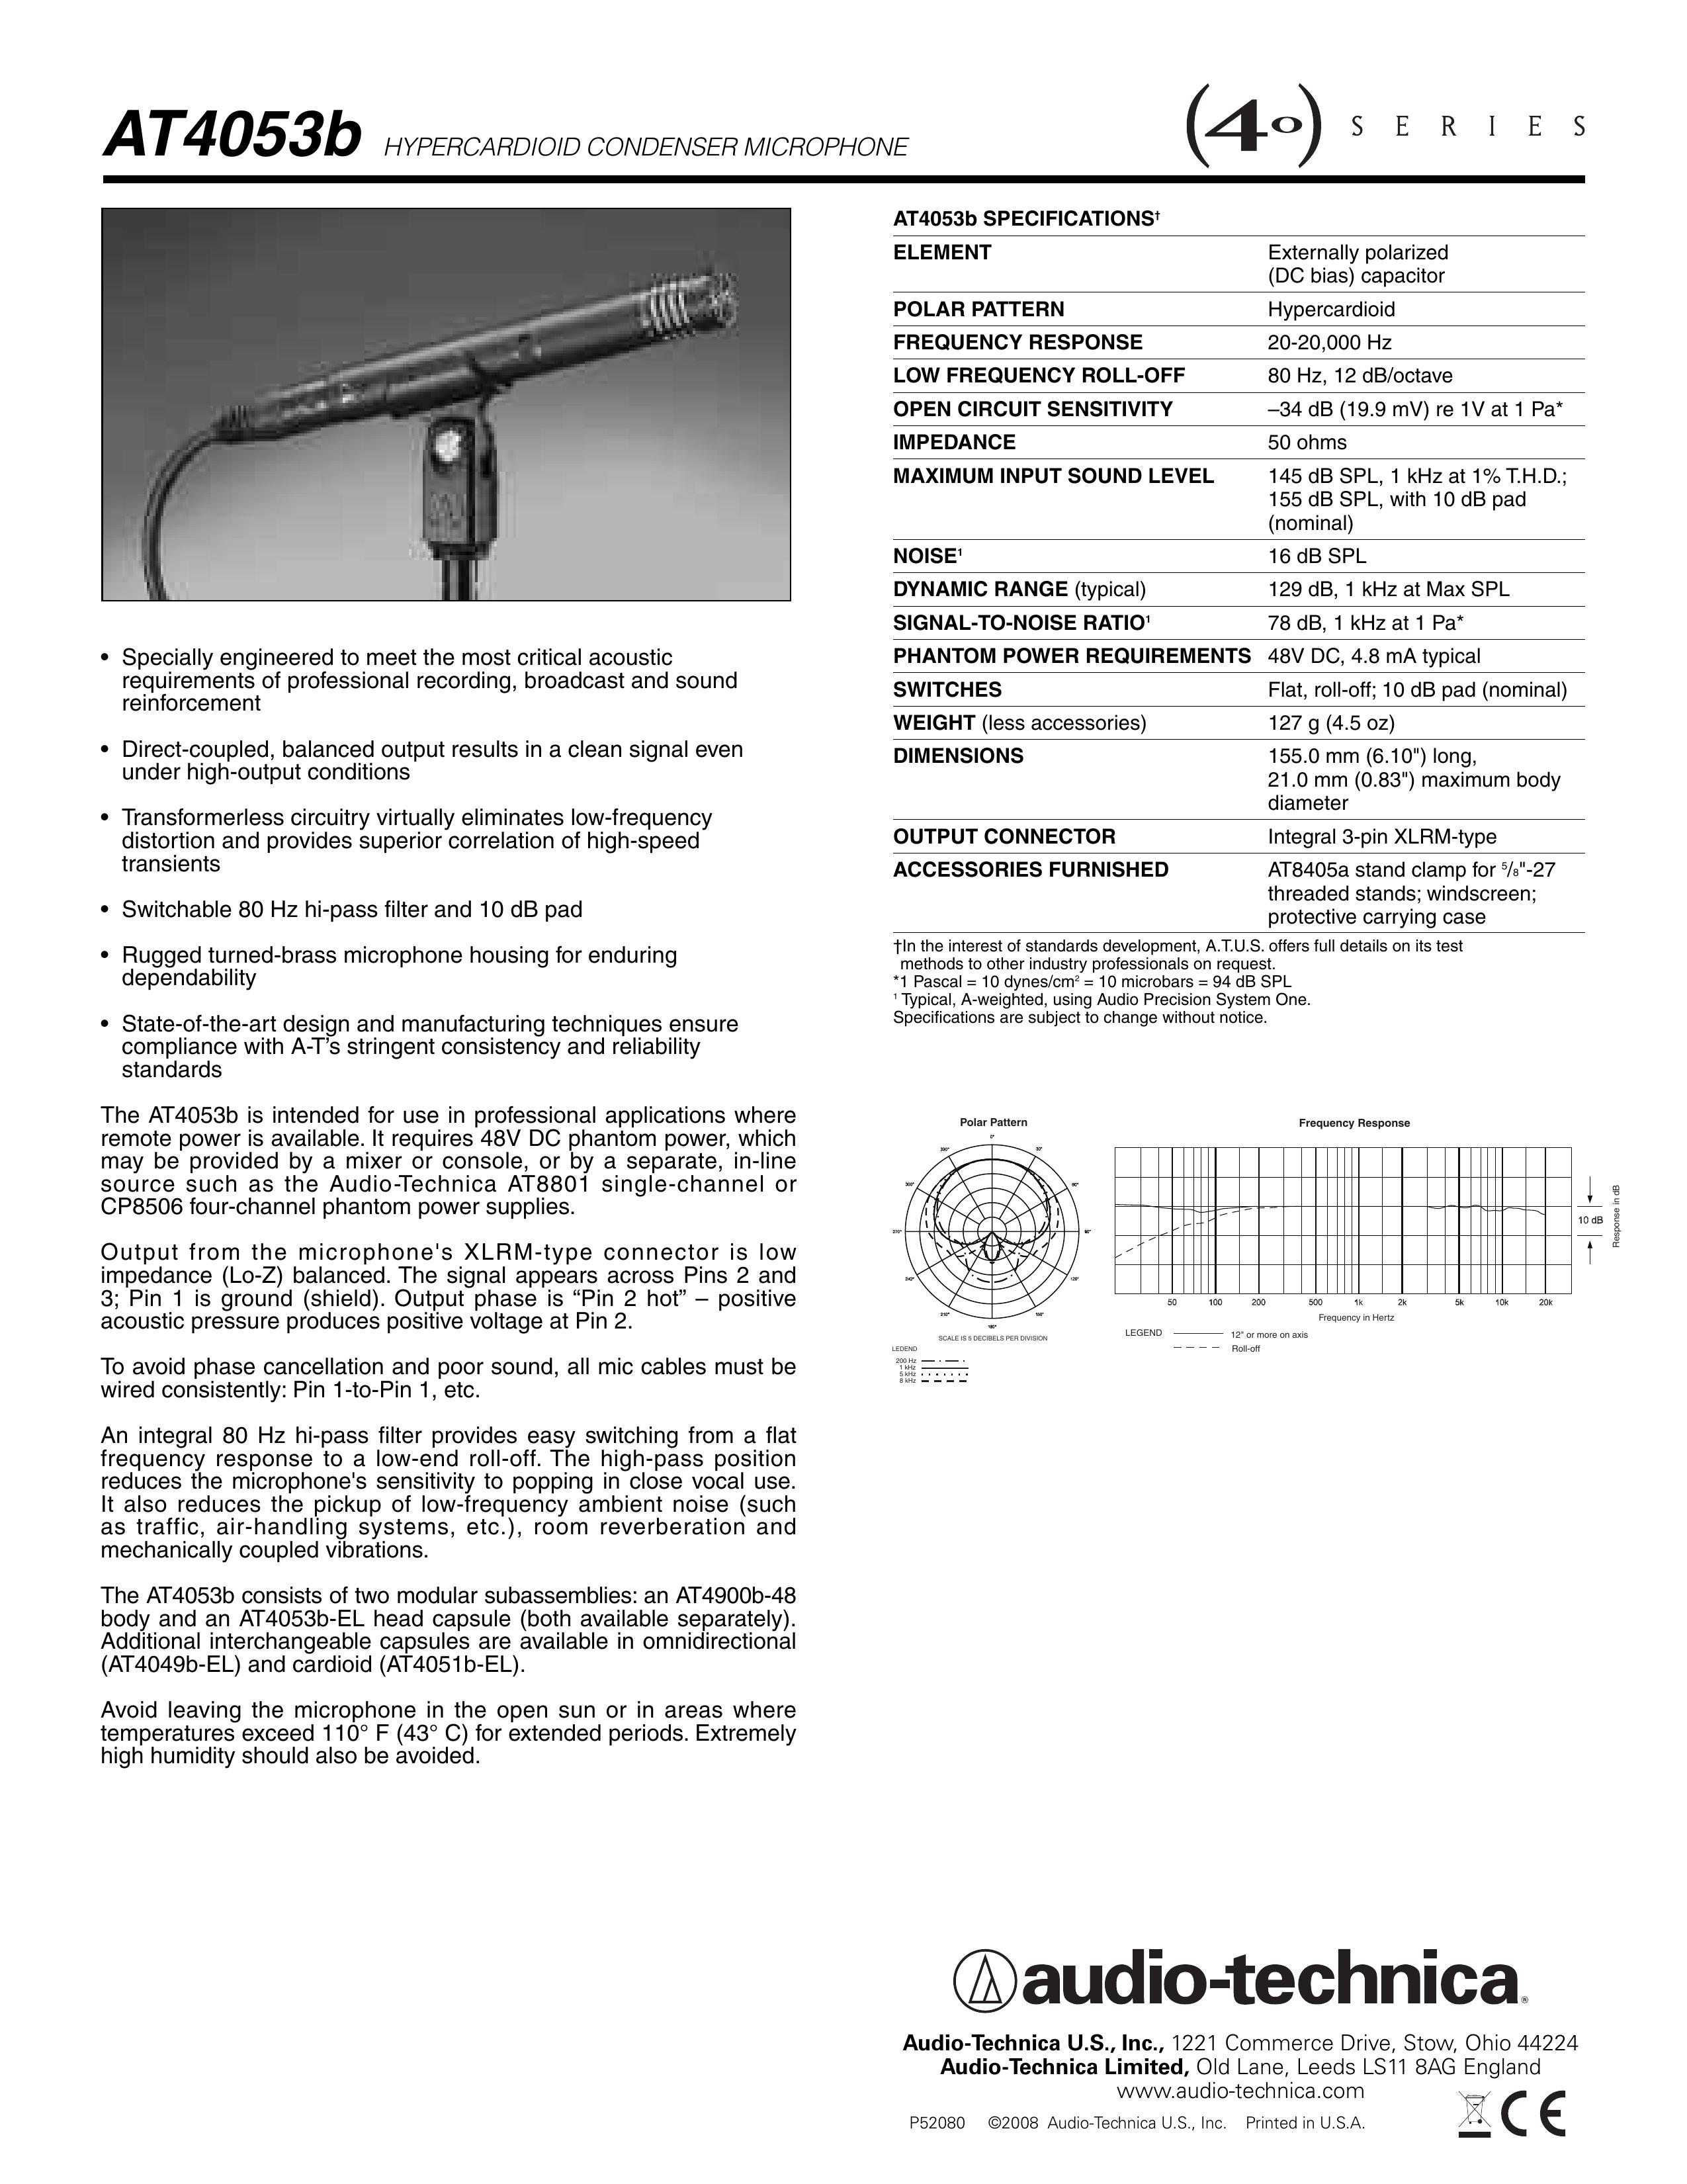 Audio-Technica AT4053b Microphone User Manual